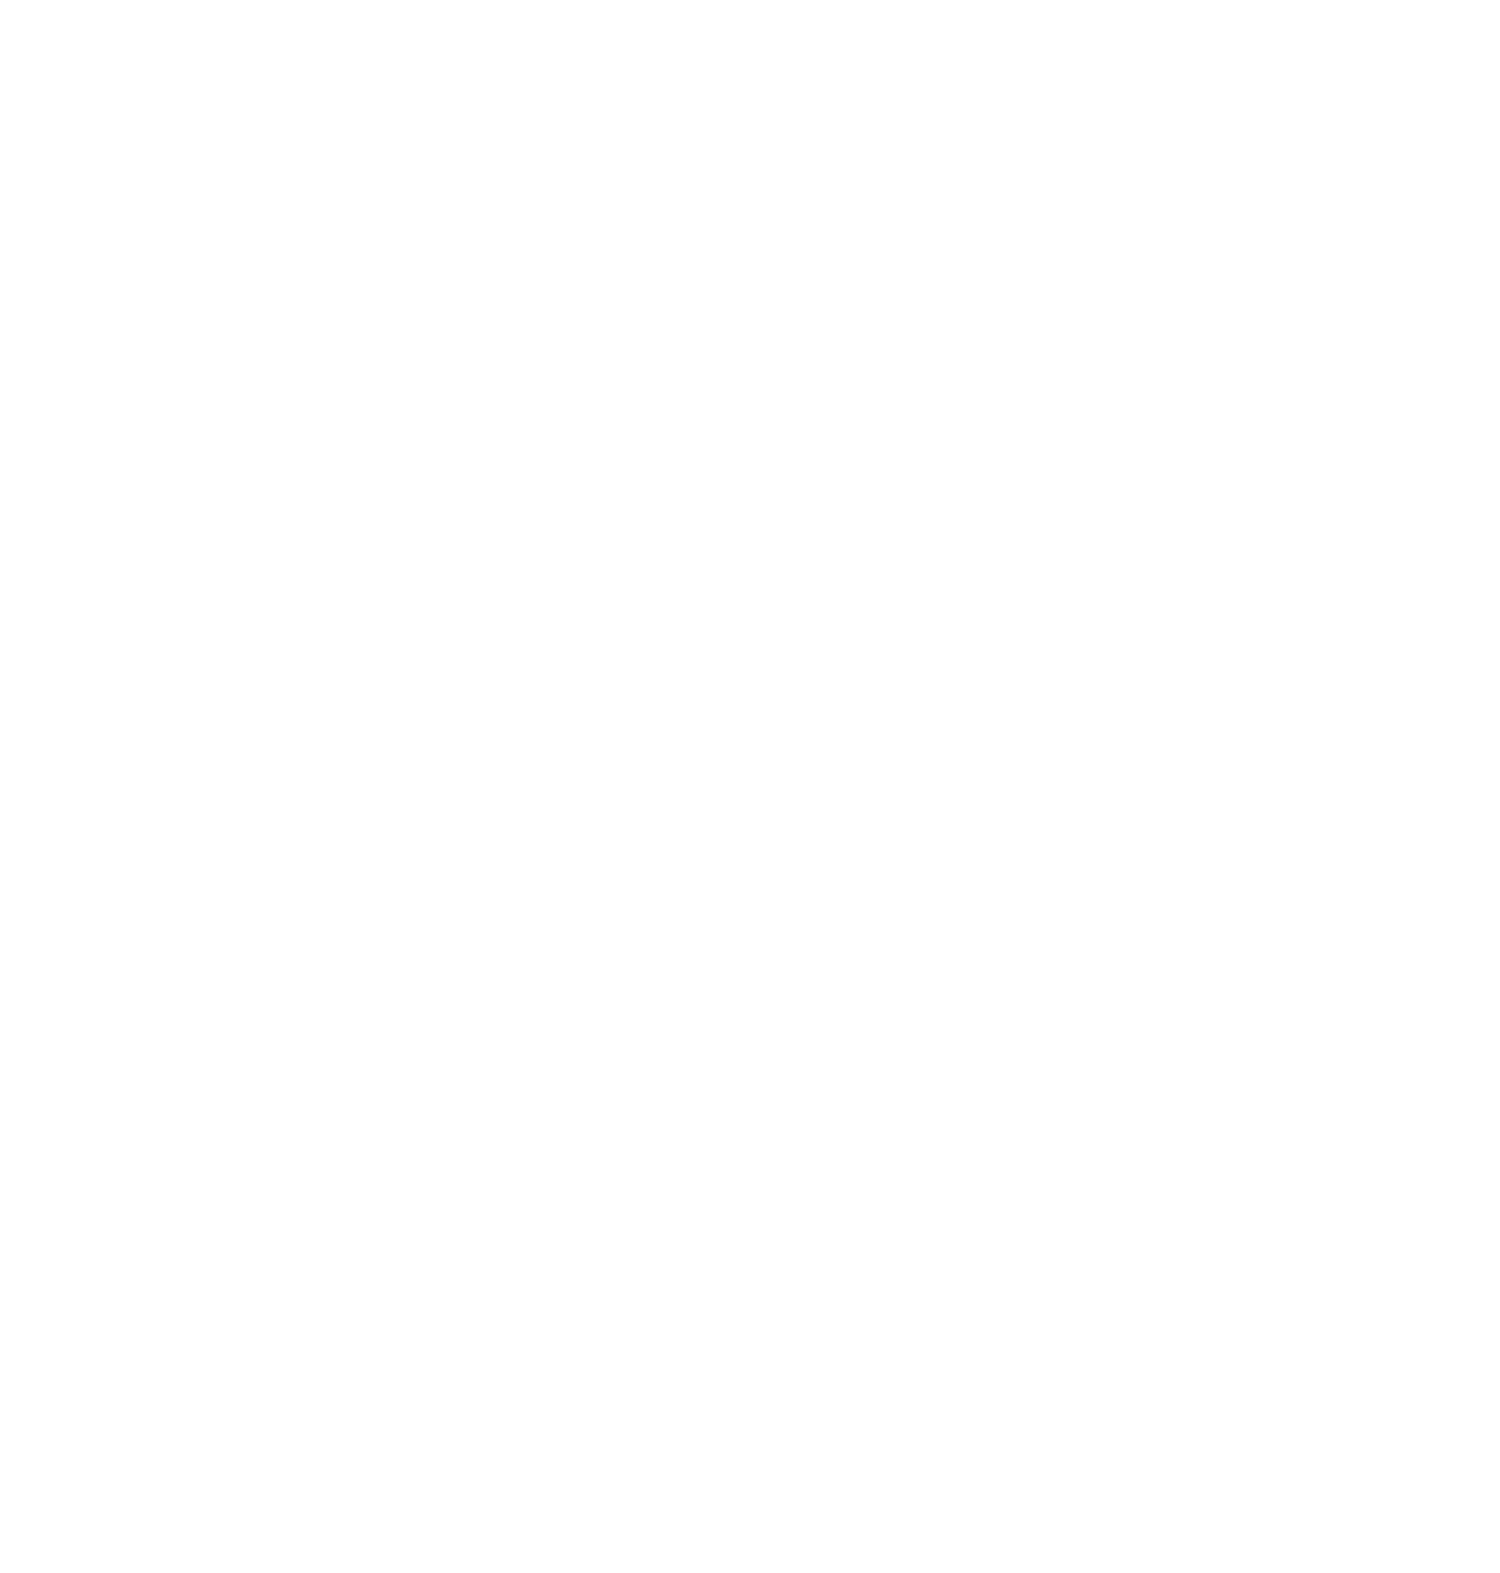 I'm An Athlete